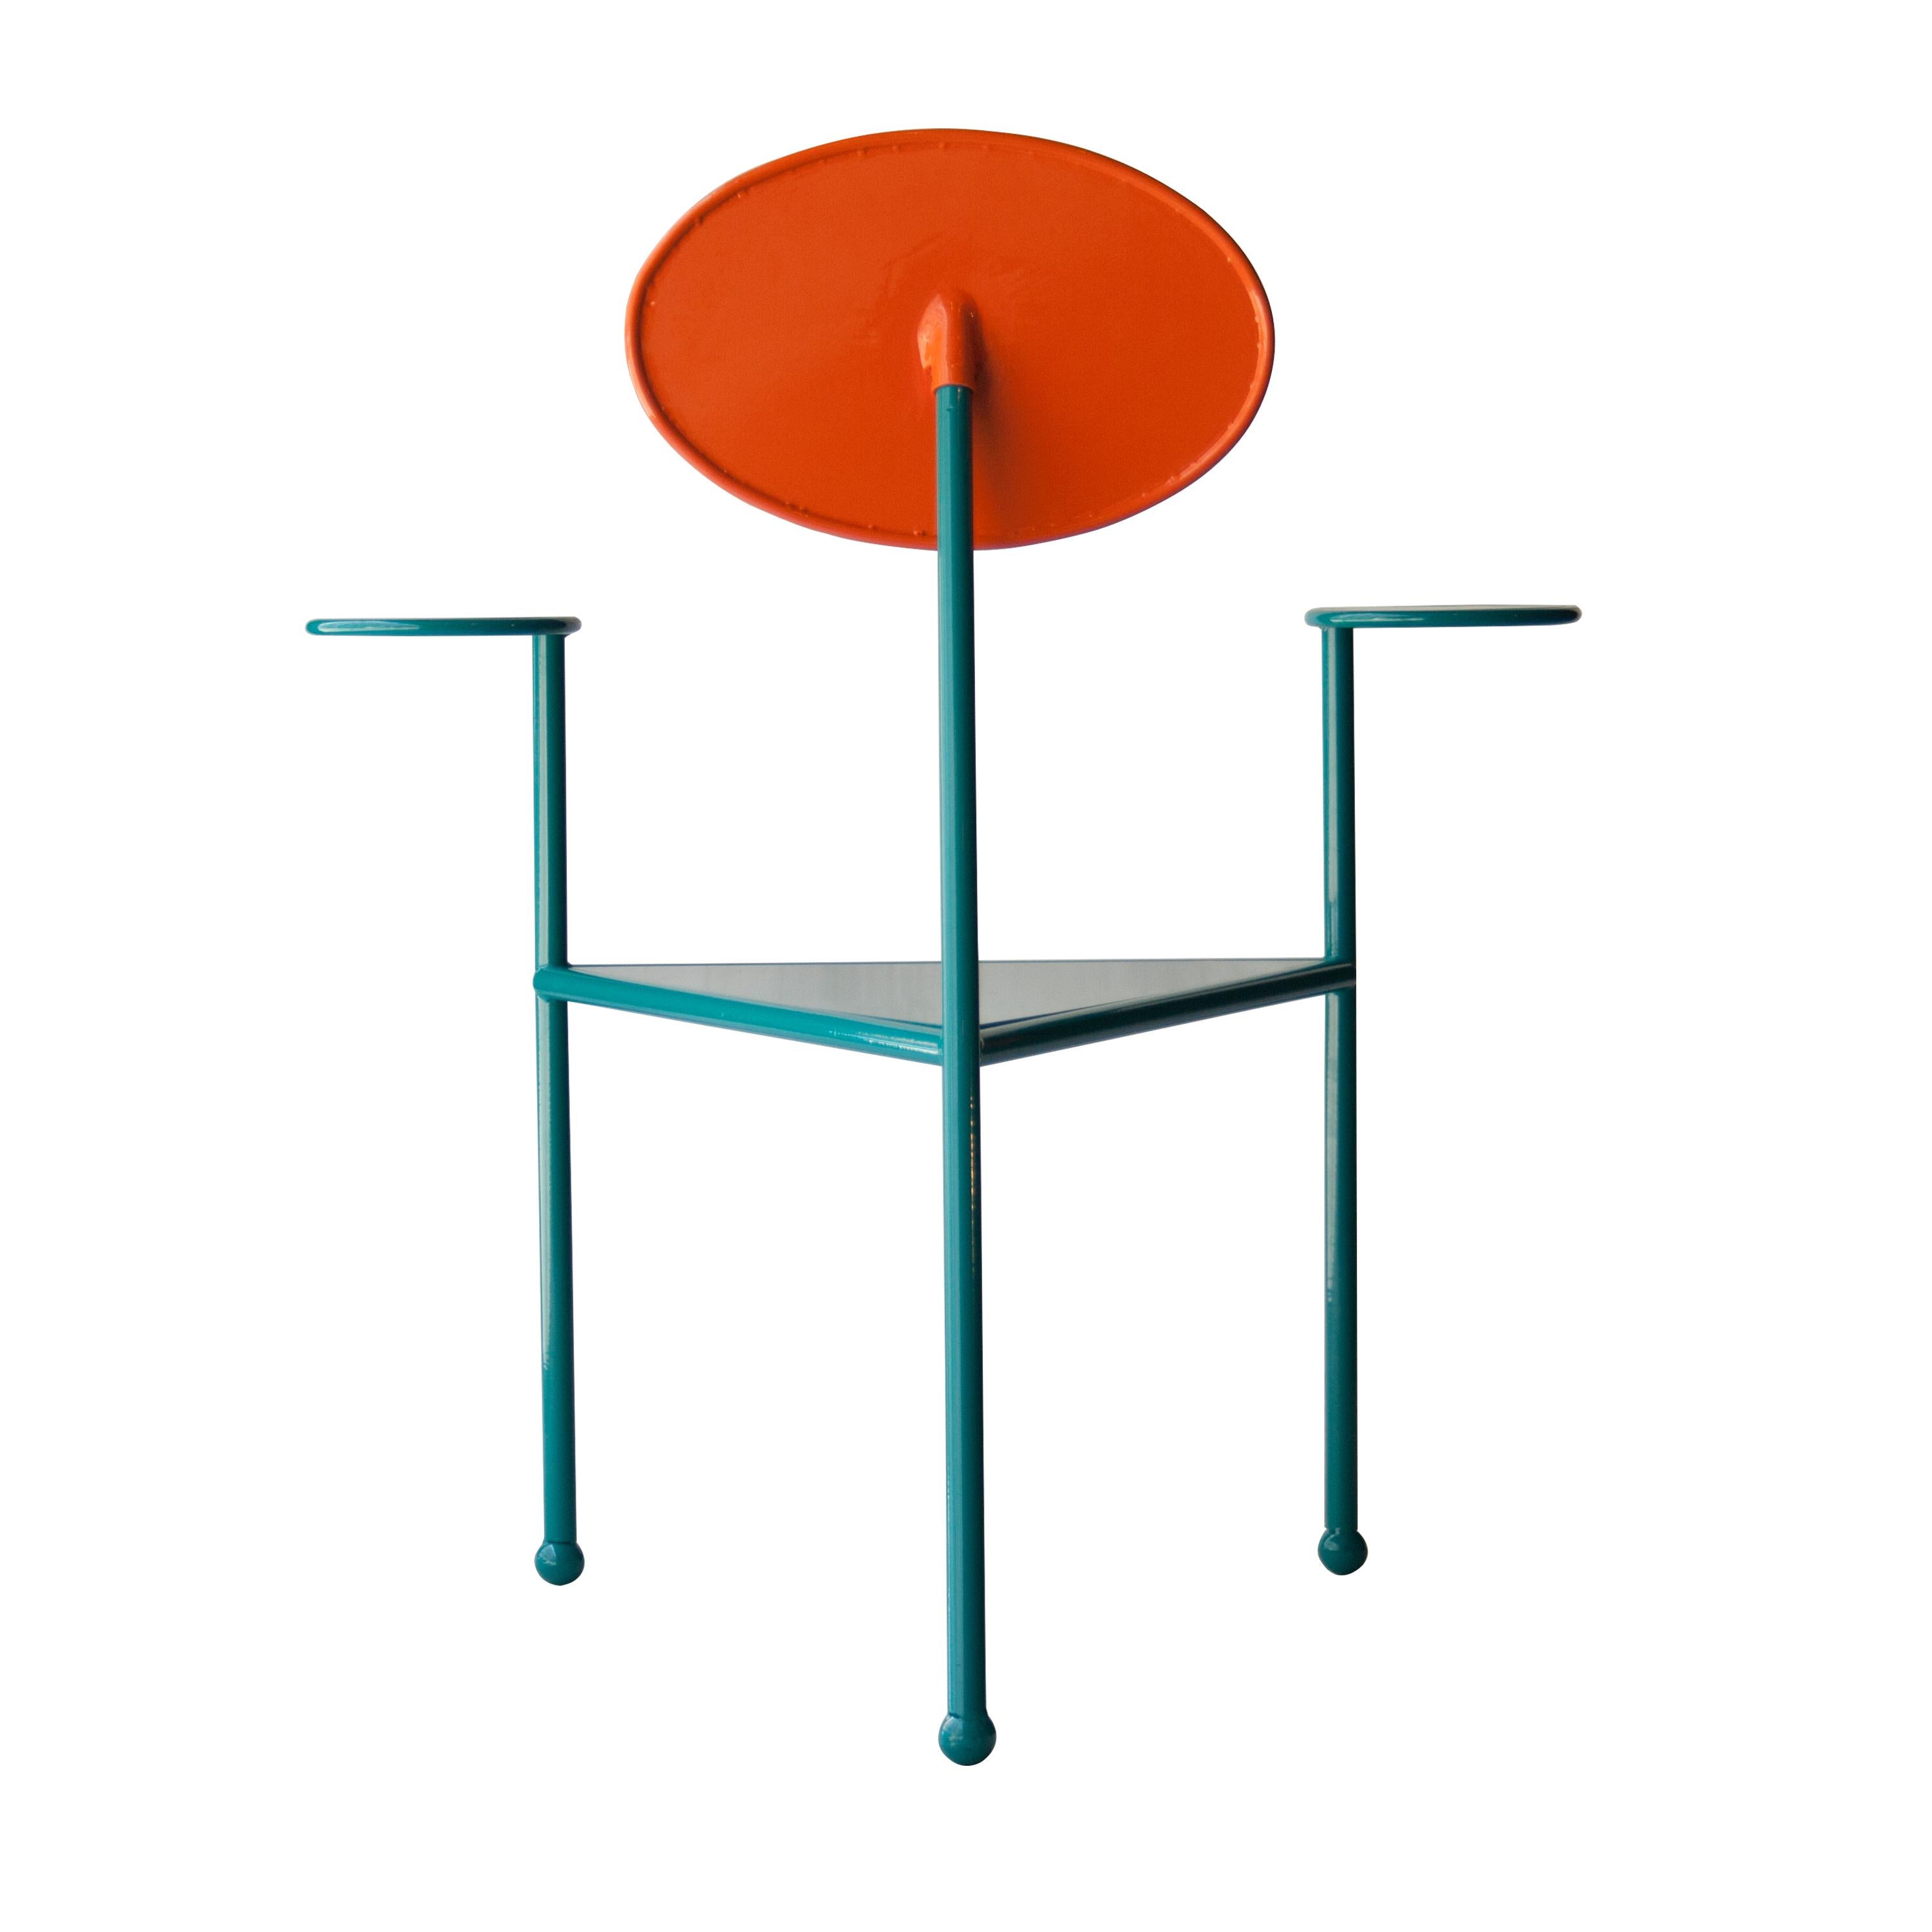 Spanish Kresta Studio Contemporary Steel Laquered Orange Green Chair, Spain, 2019